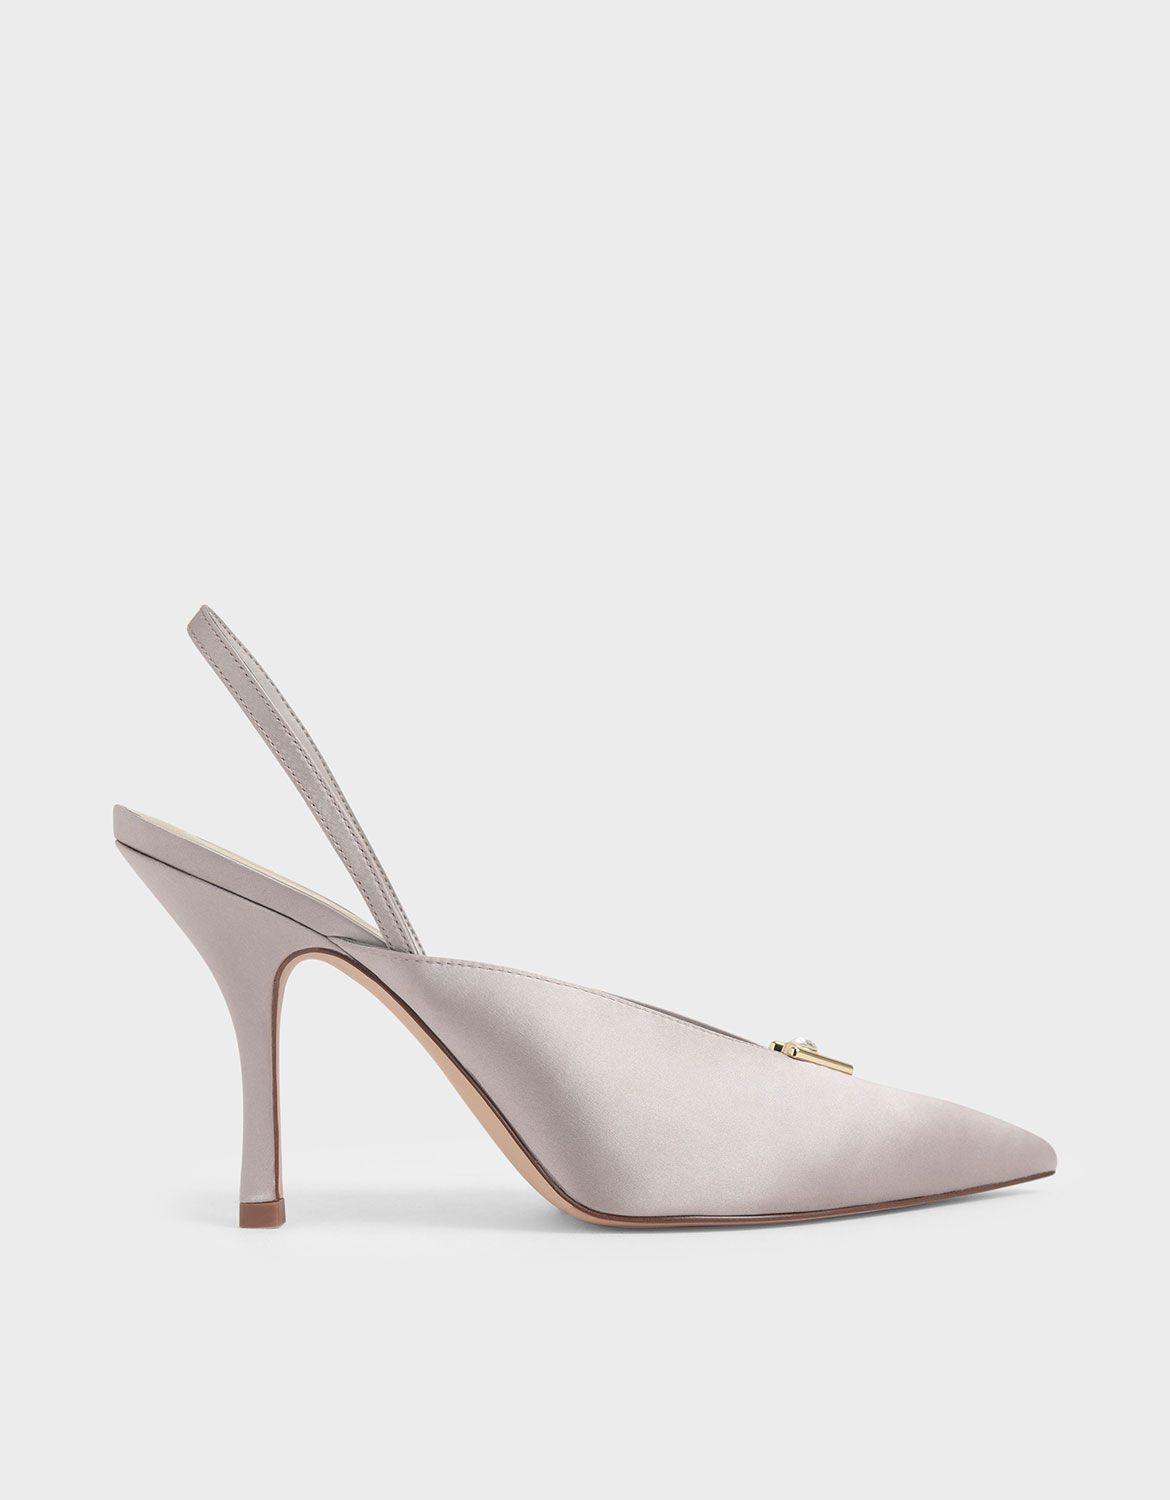 grey satin heels